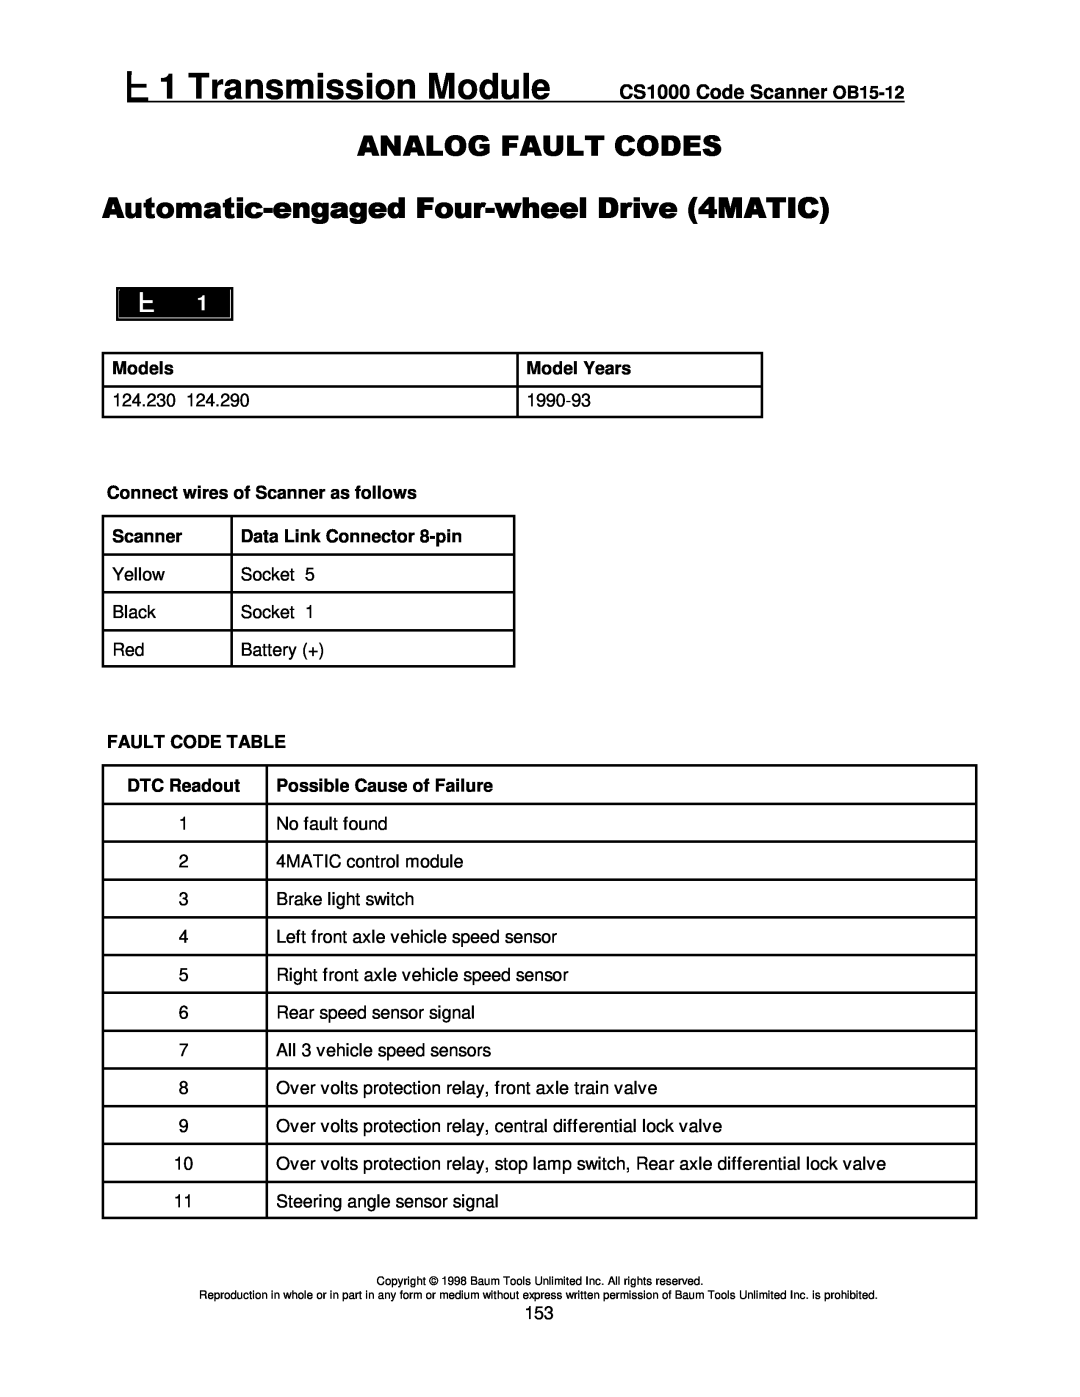 Mercedes-Benz manual Transmission$!&#2Module$*+#,3CS1000Code-Scanner OB15-12, Models, Model Years, 124.230, 1990-93 